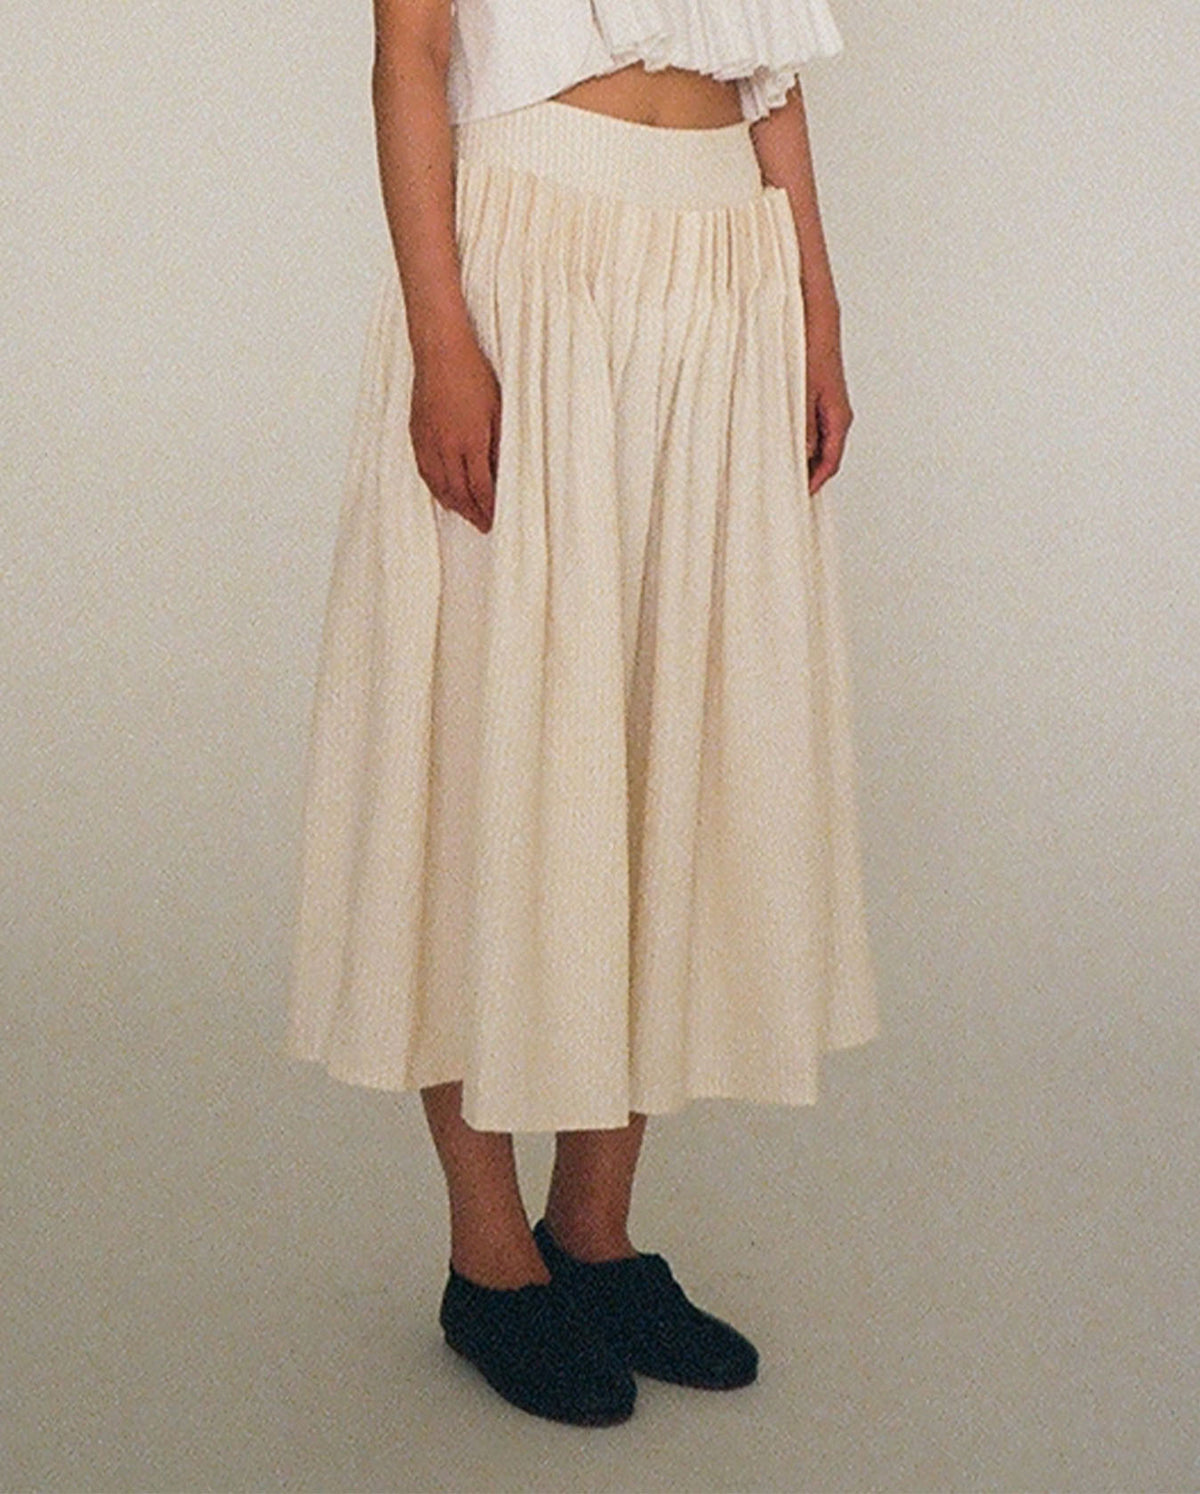 Luna Skirt